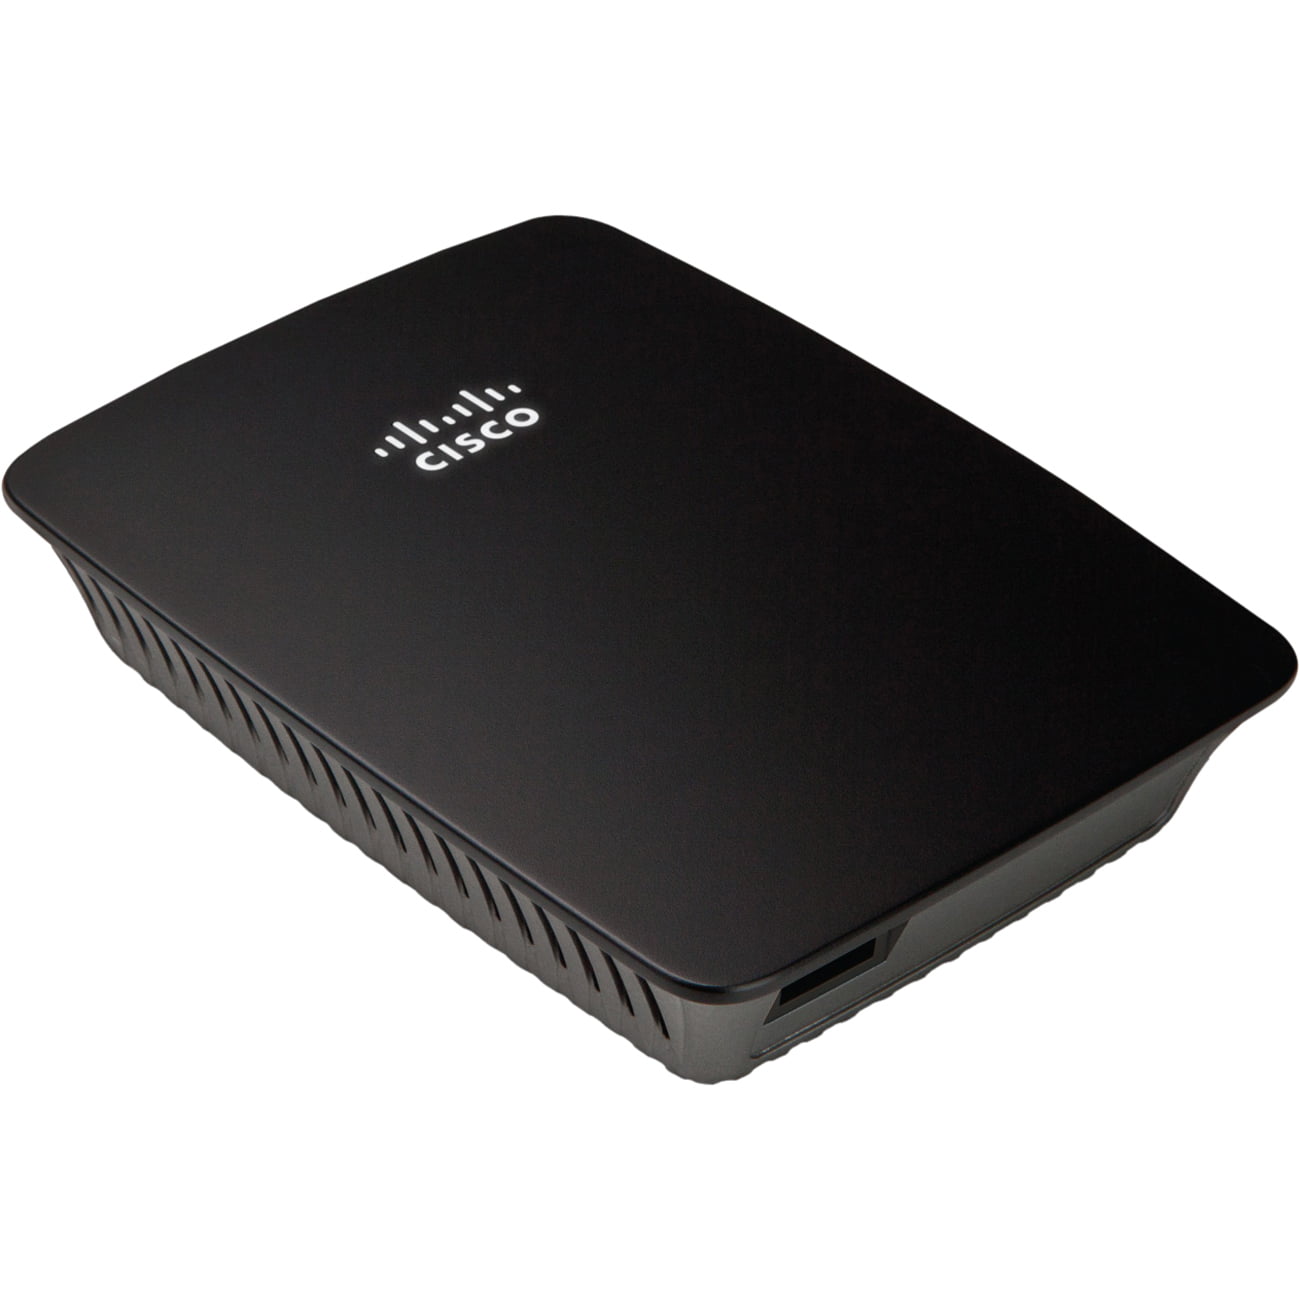 Cisco r1000 range extender software bien comodo mp3 download